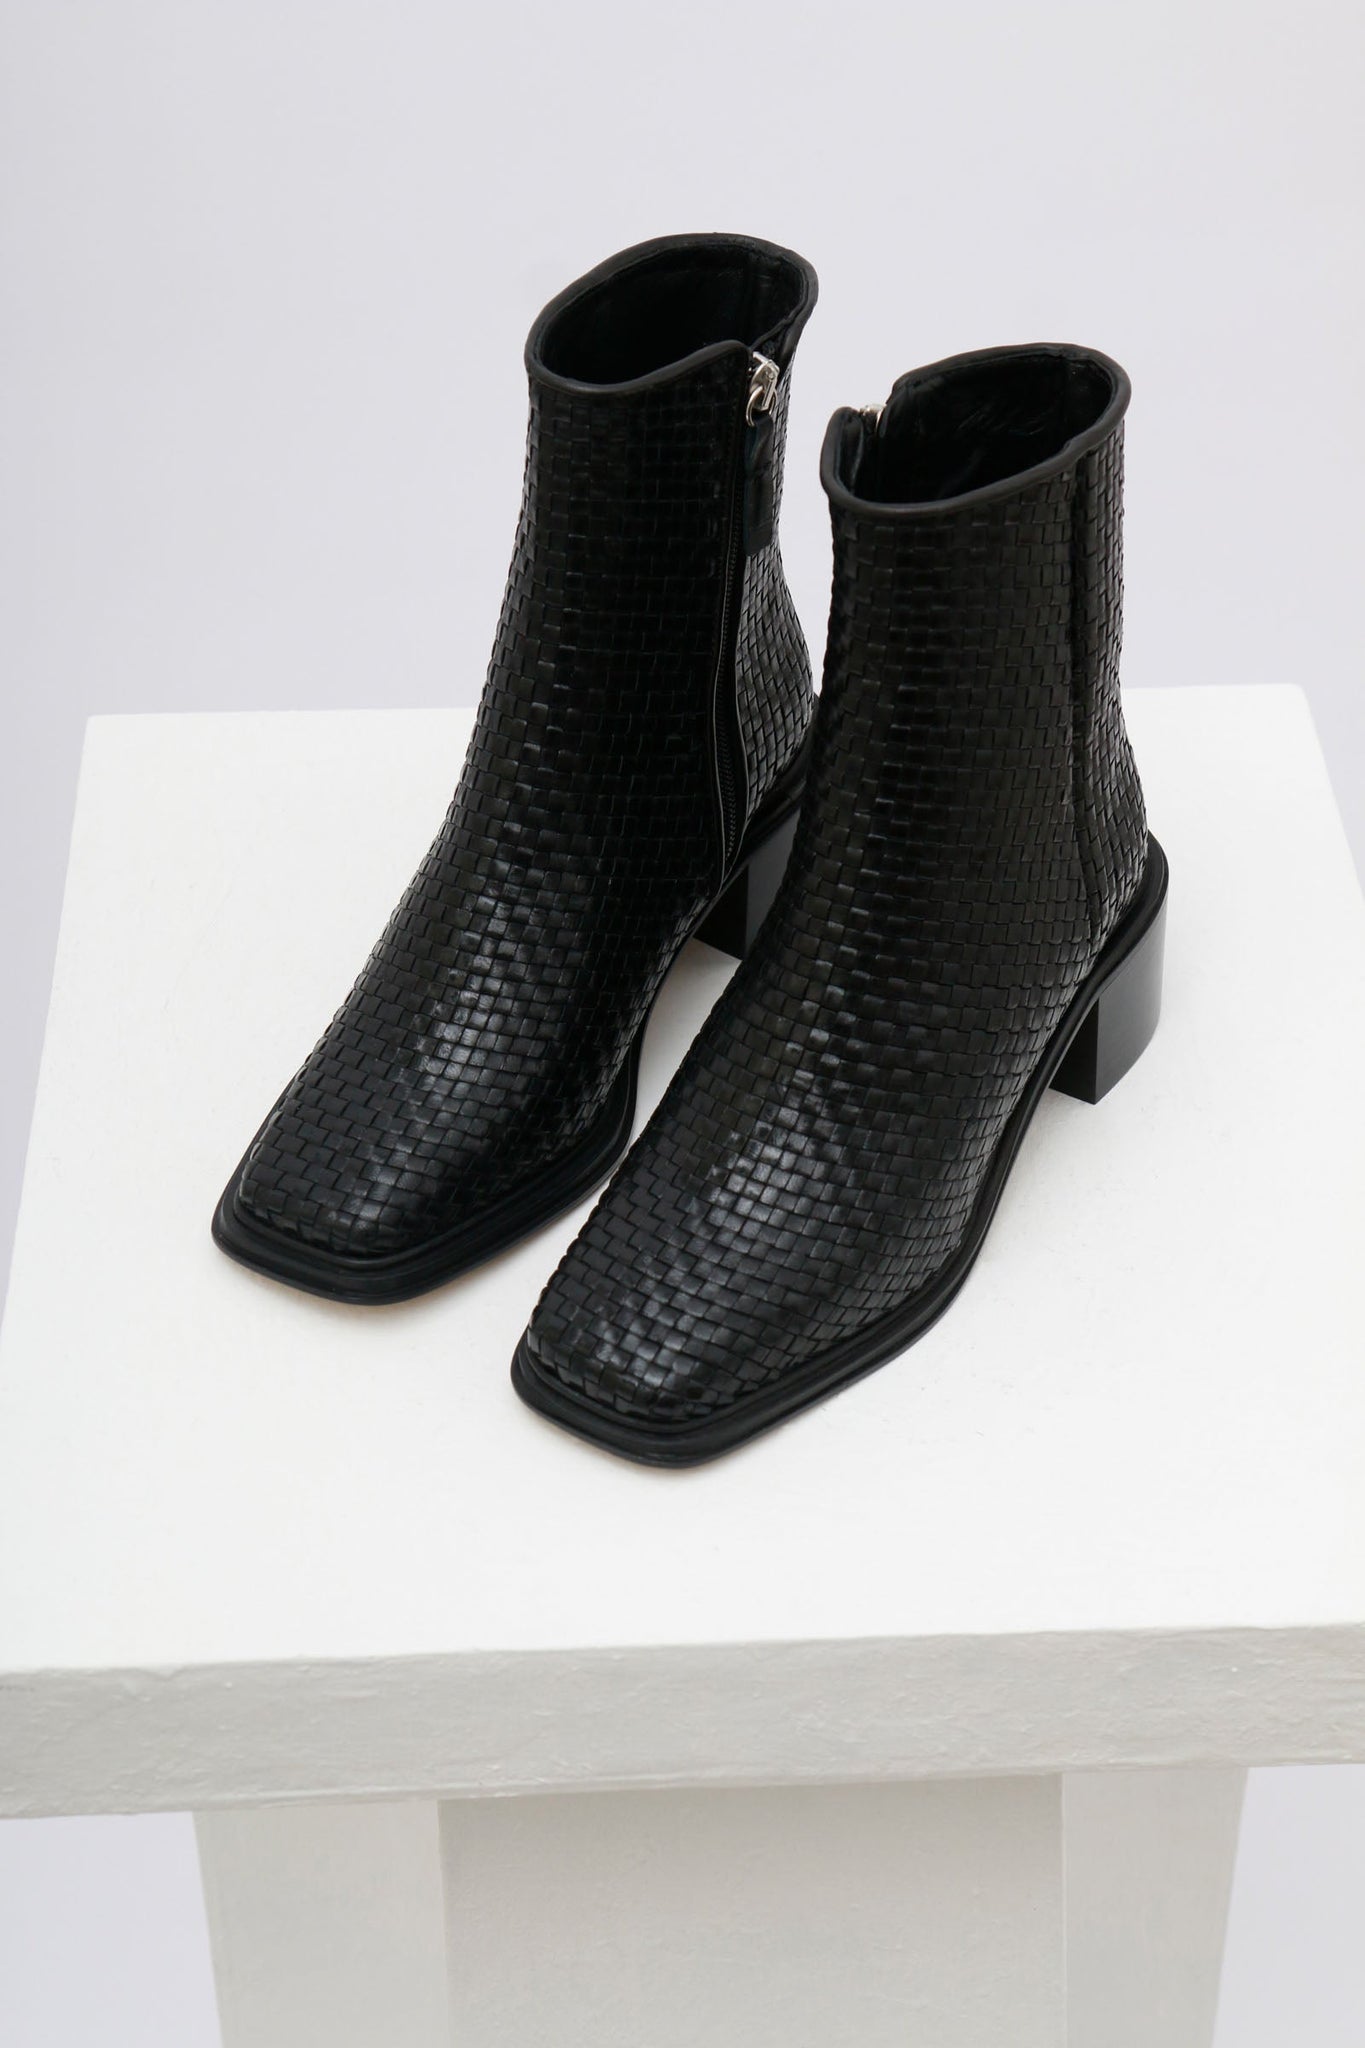 Souliers Martinez Shoes AURIA - Black Woven Leather Ankle Boots 